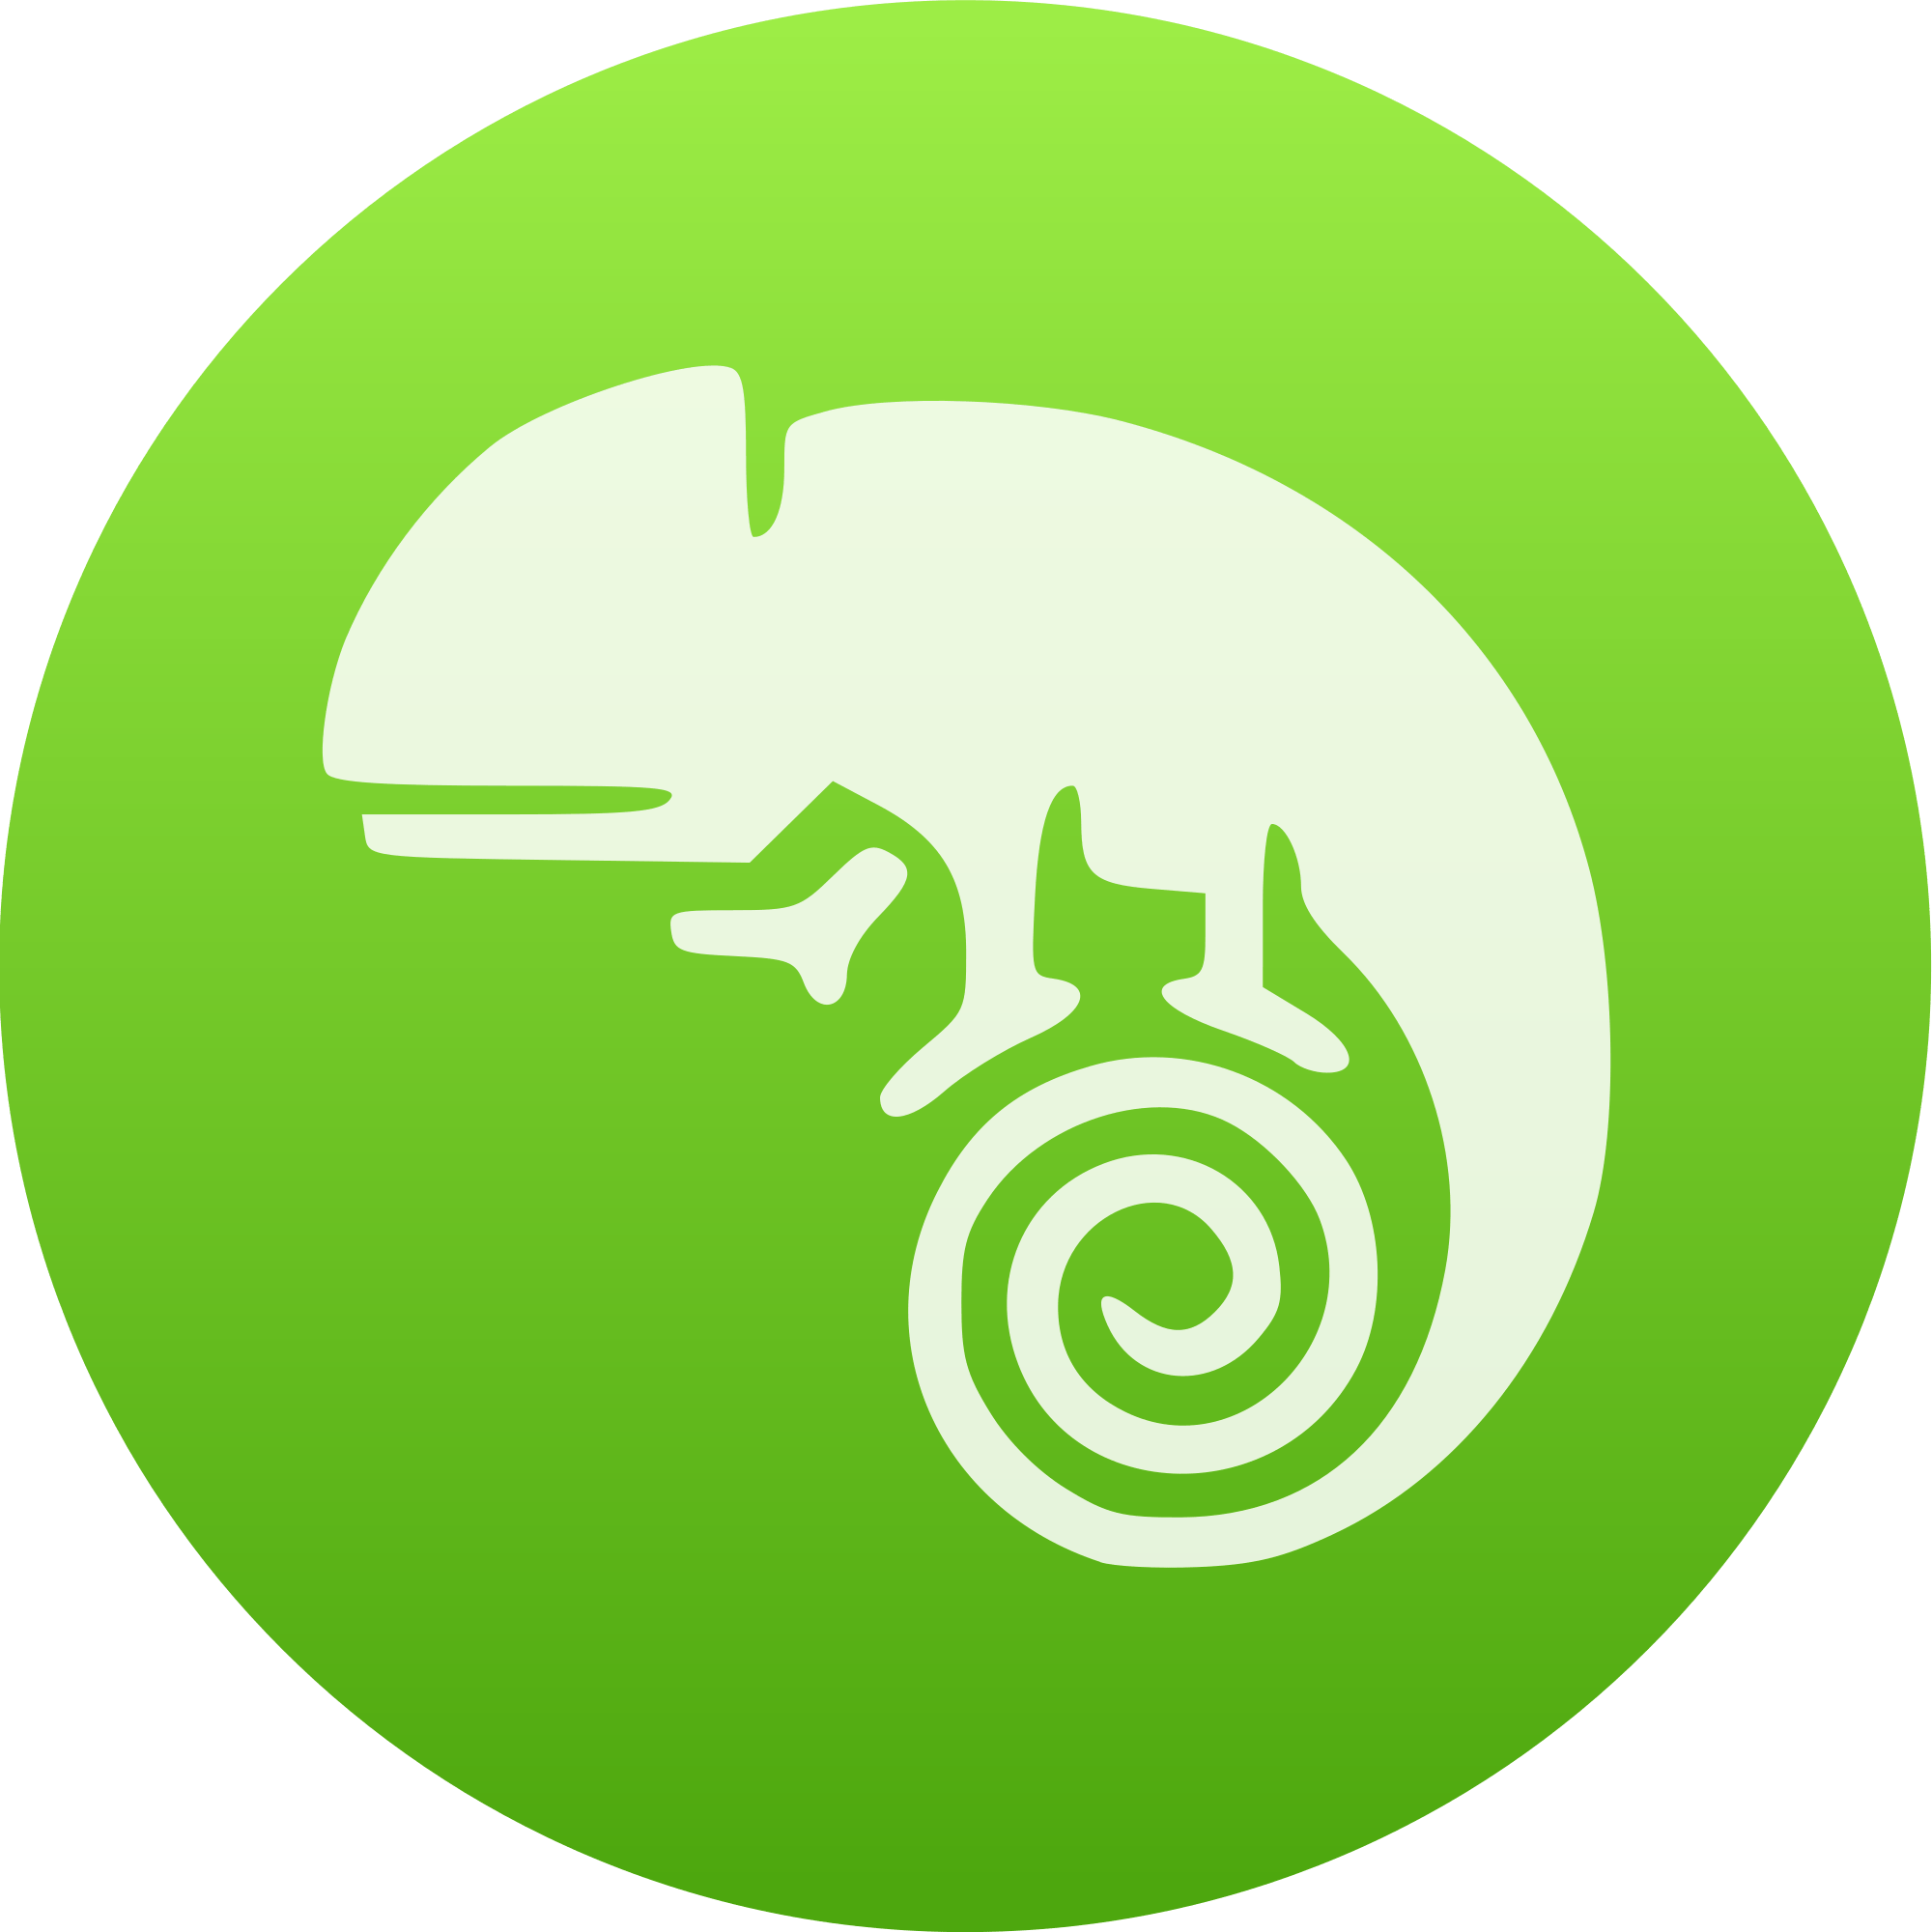 openSUSE Logo - Antu Distributor Logo Opensuse.svg